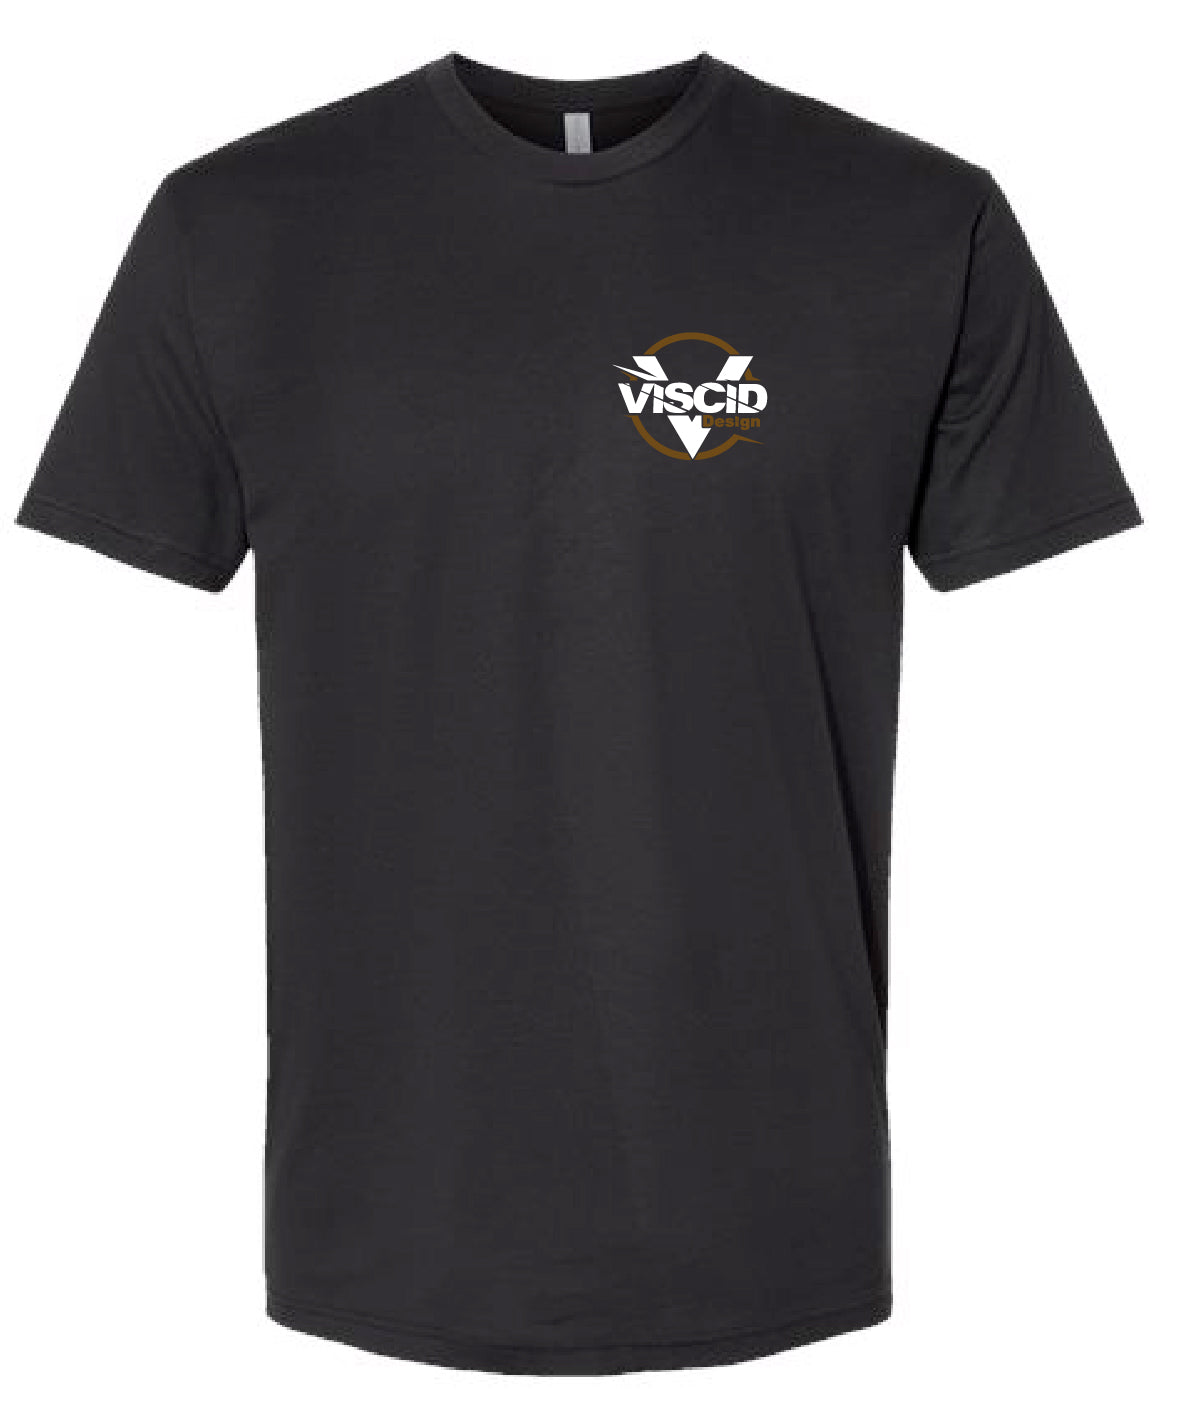 Black/Gold Viscid T-Shirt